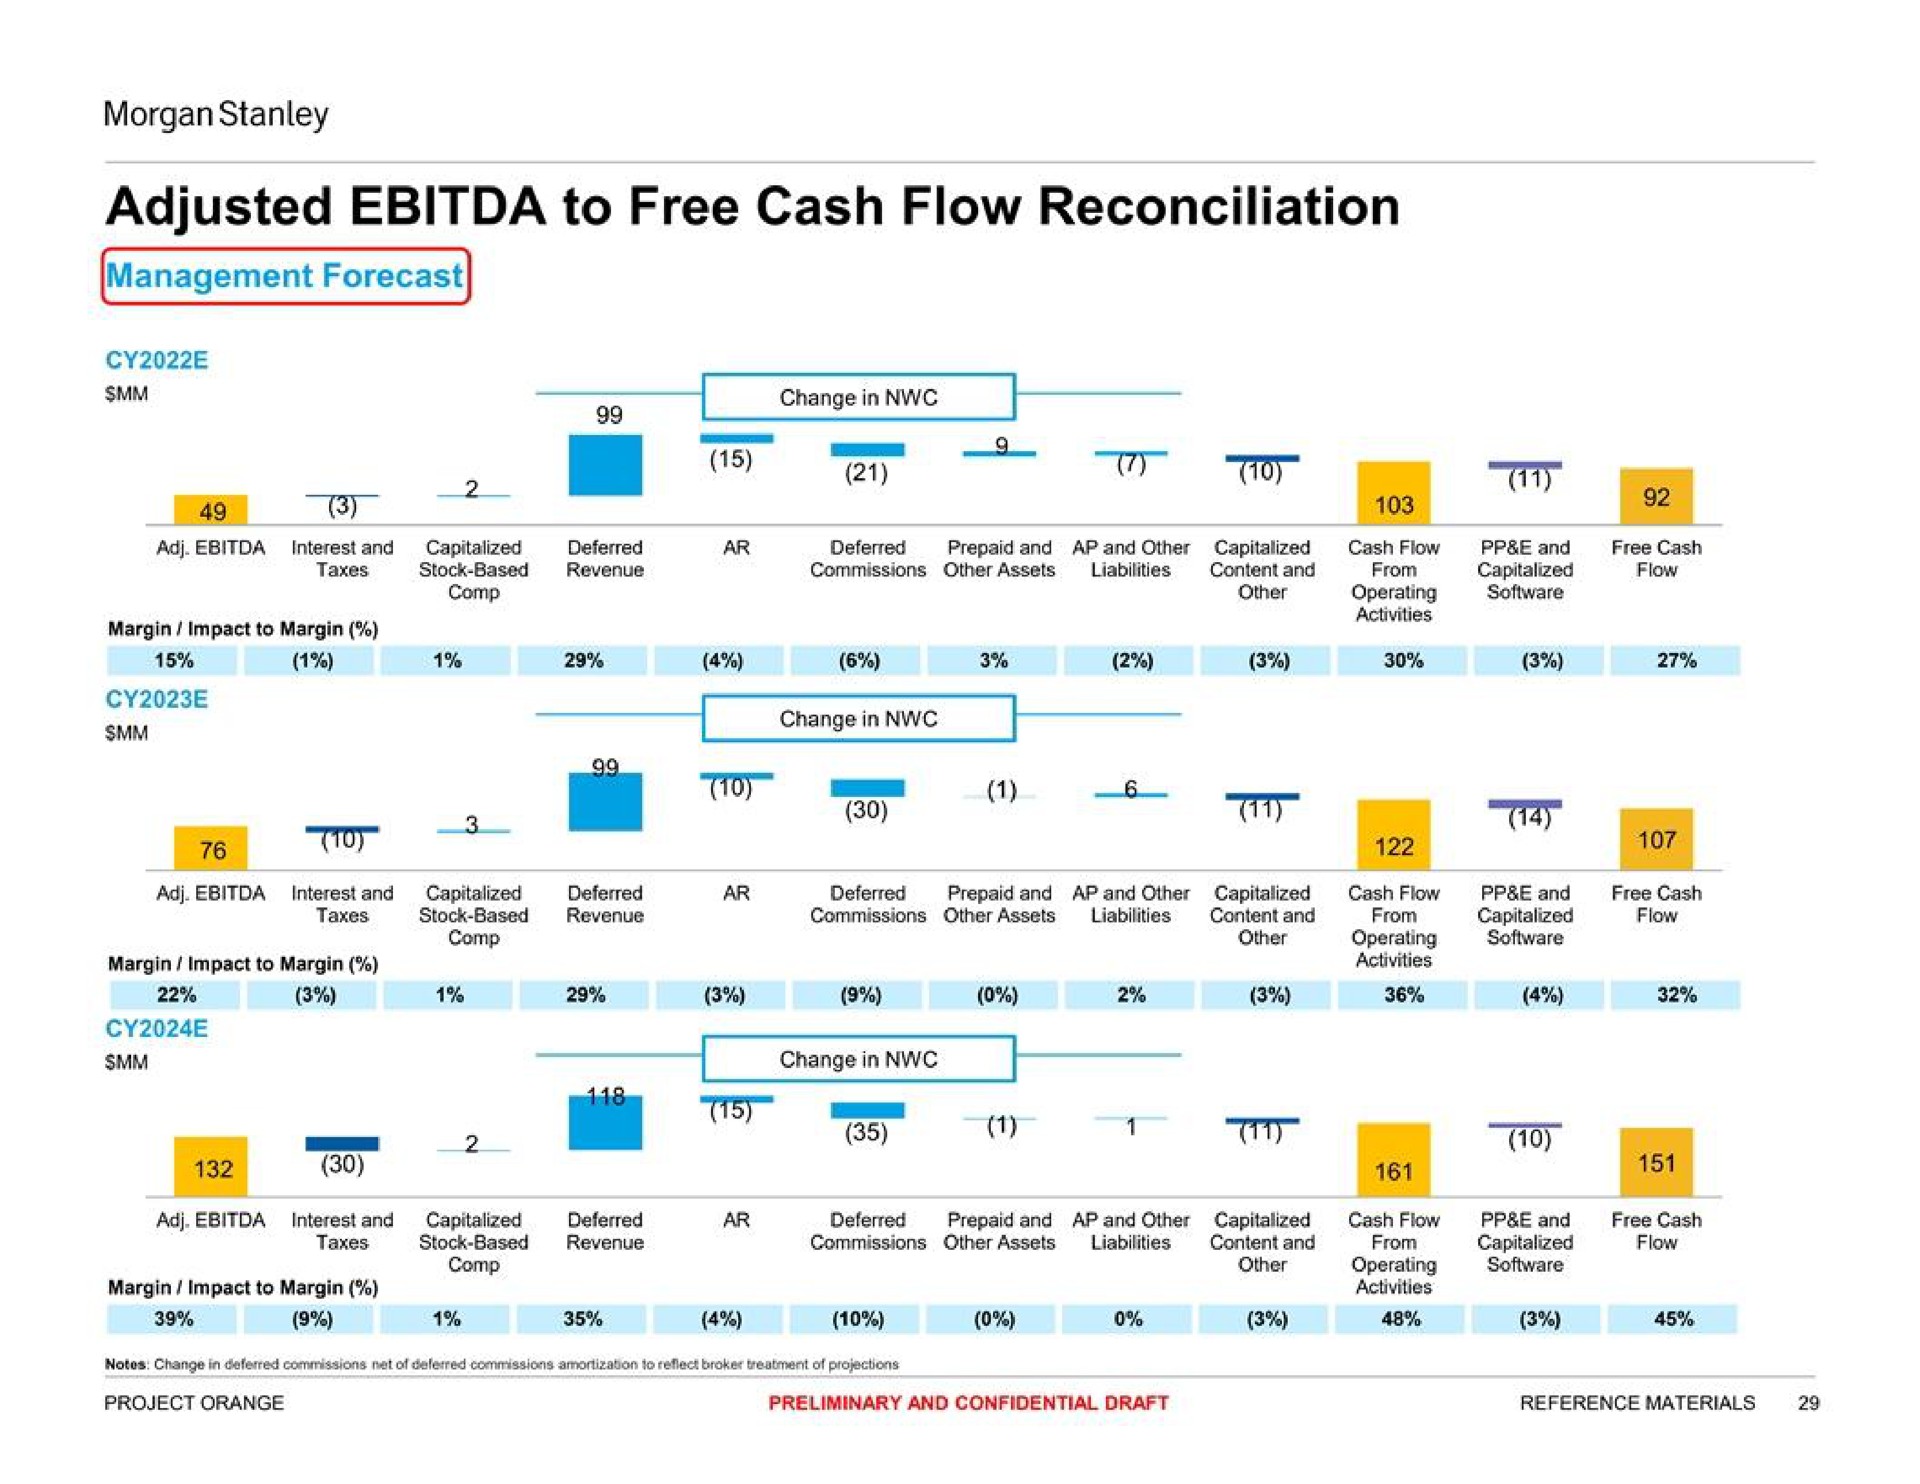 adjusted to free cash flow reconciliation | Morgan Stanley